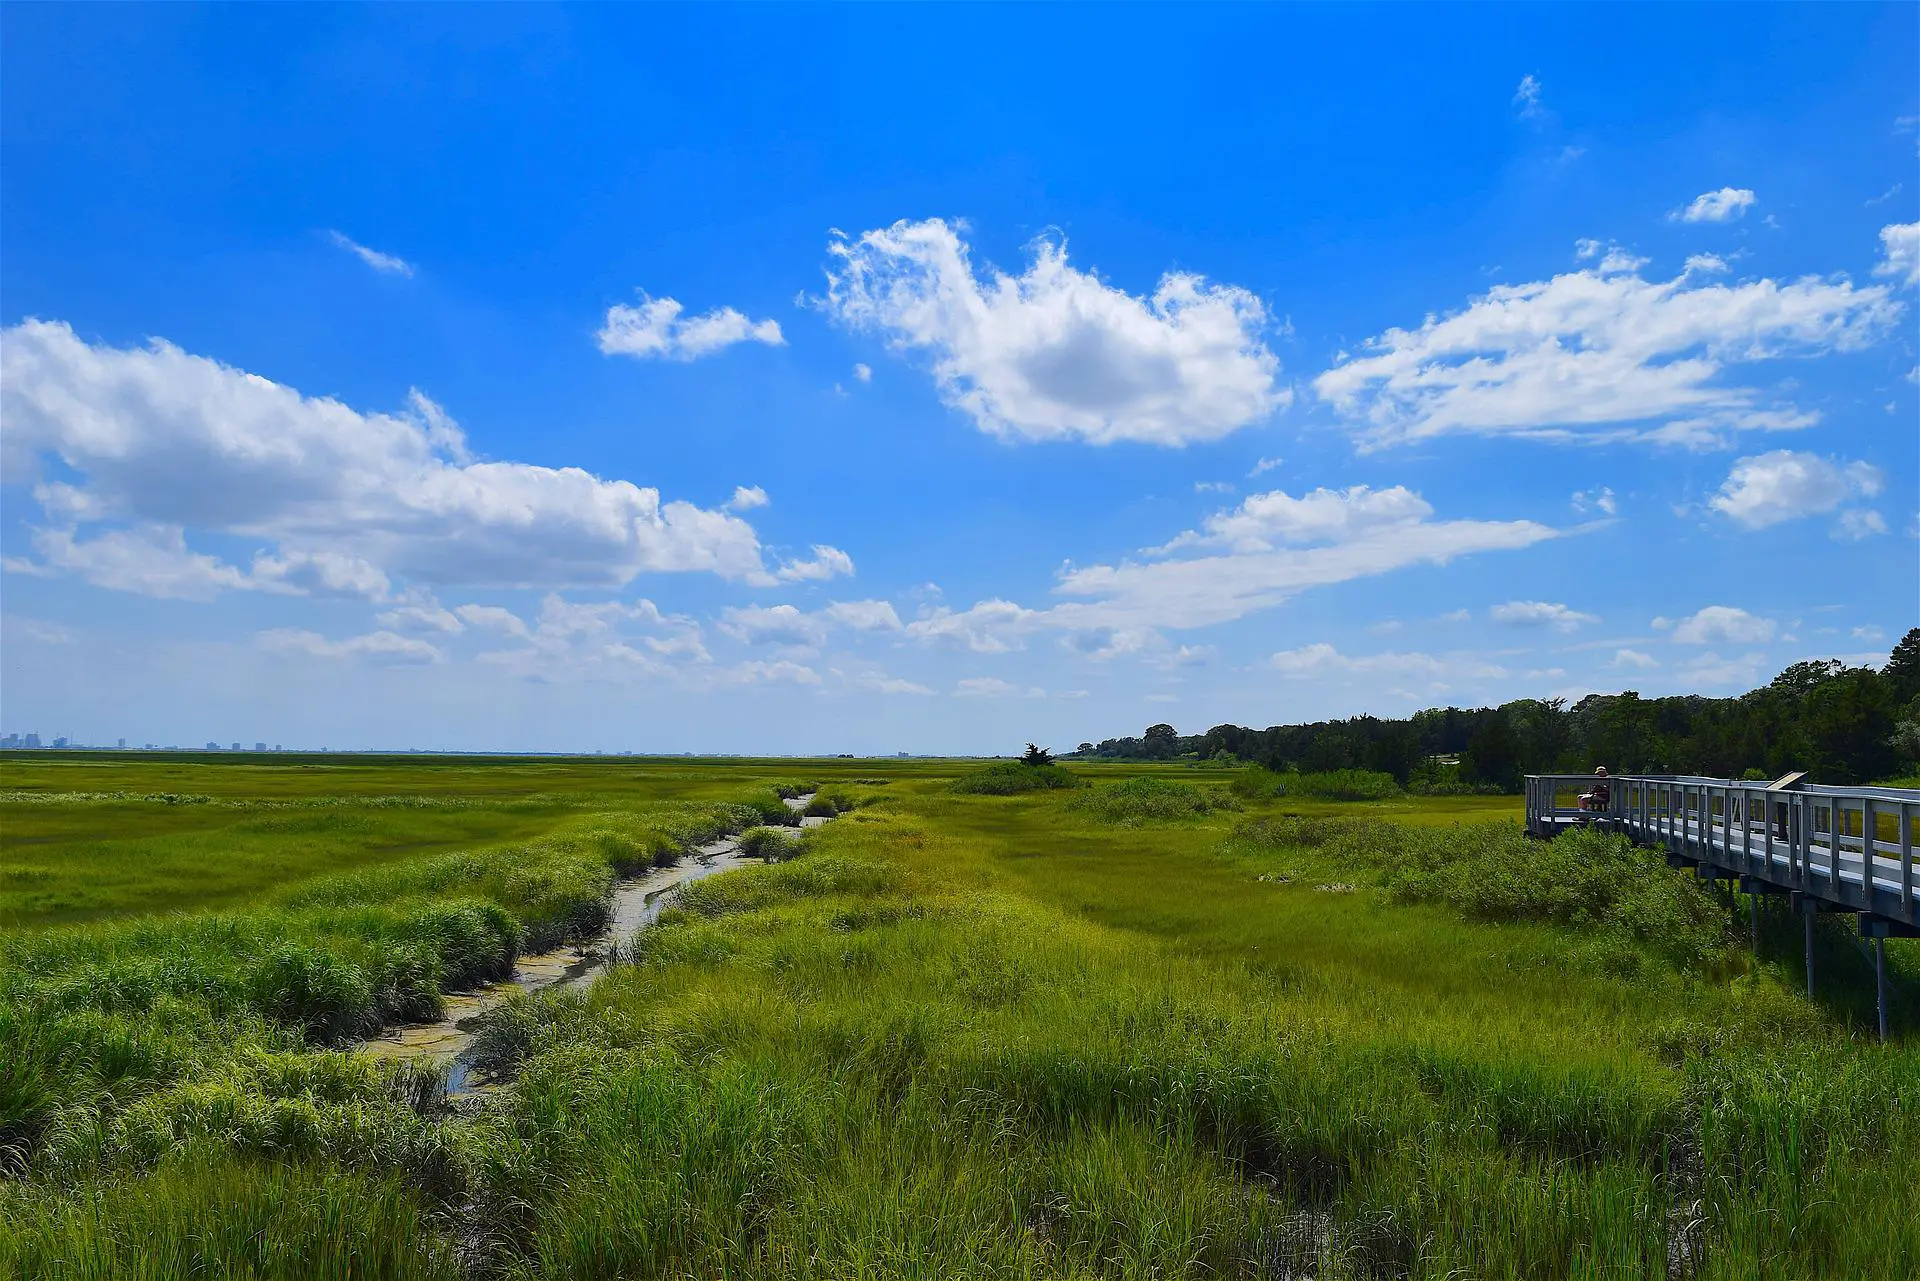 A marshy area on low tide